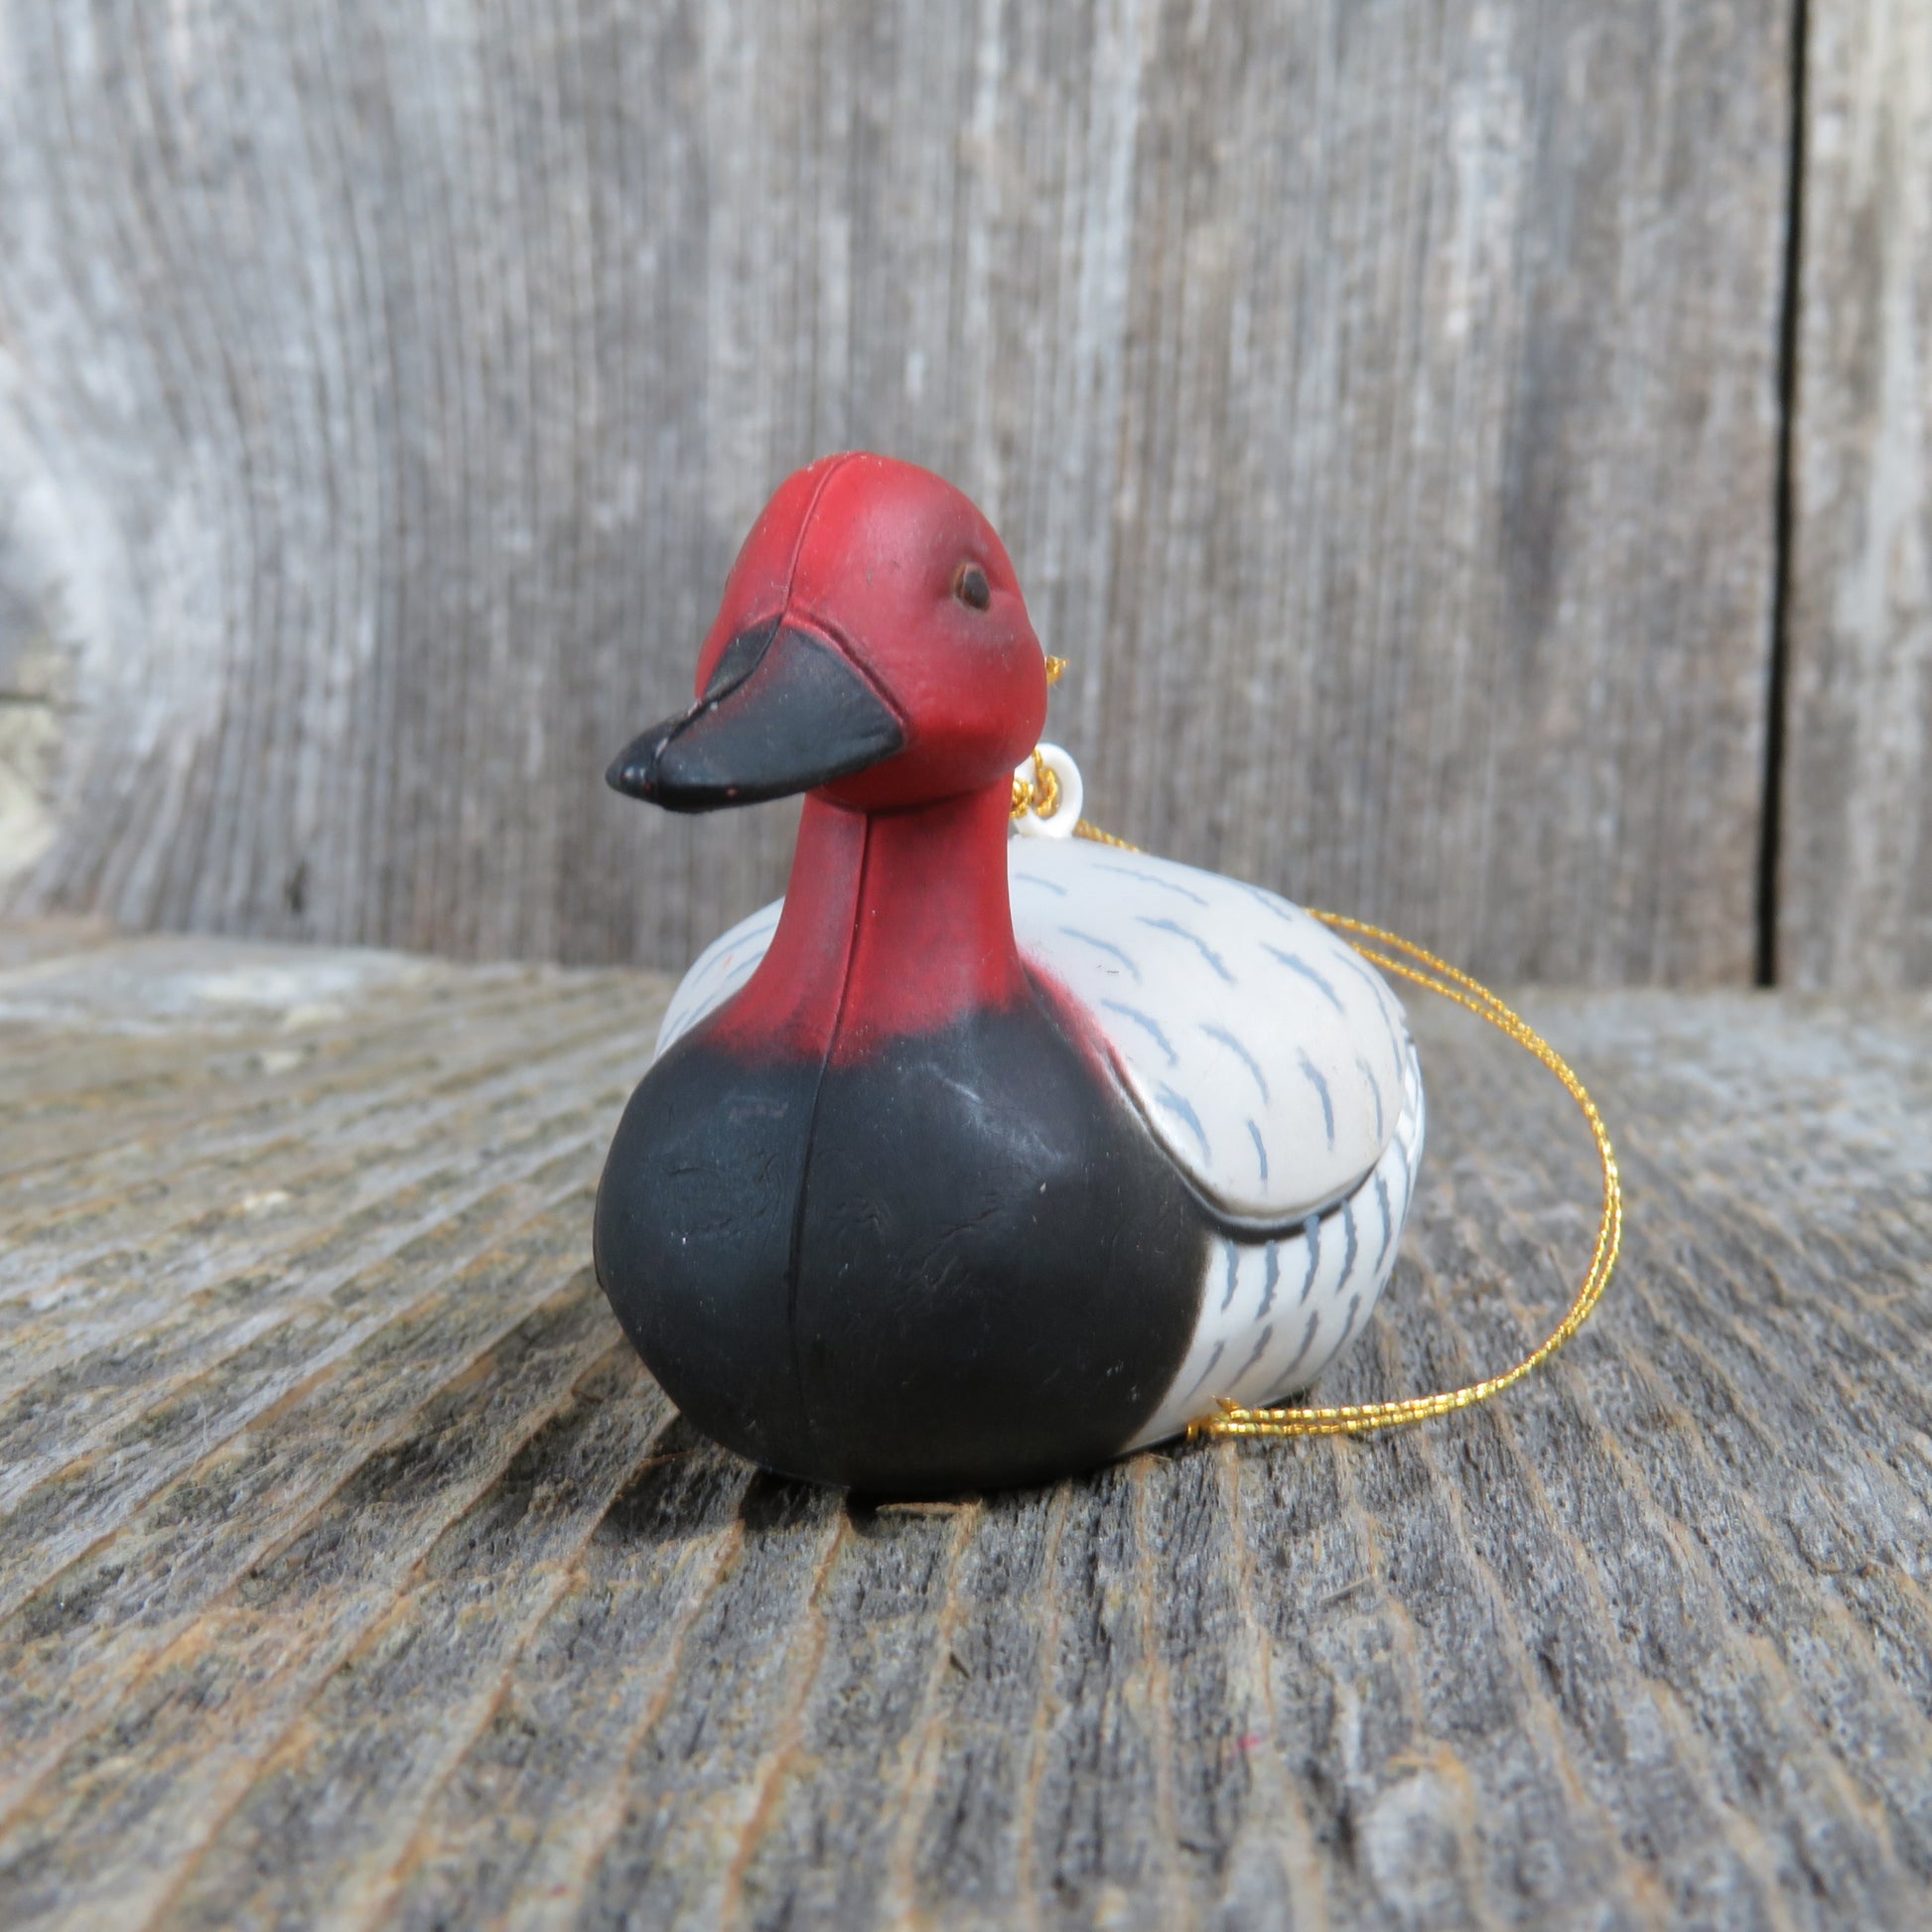 Vintage Redhead Duck Bird Ornament Black Breasted Decoy Hong Kong Christmas Holiday Decor - At Grandma's Table